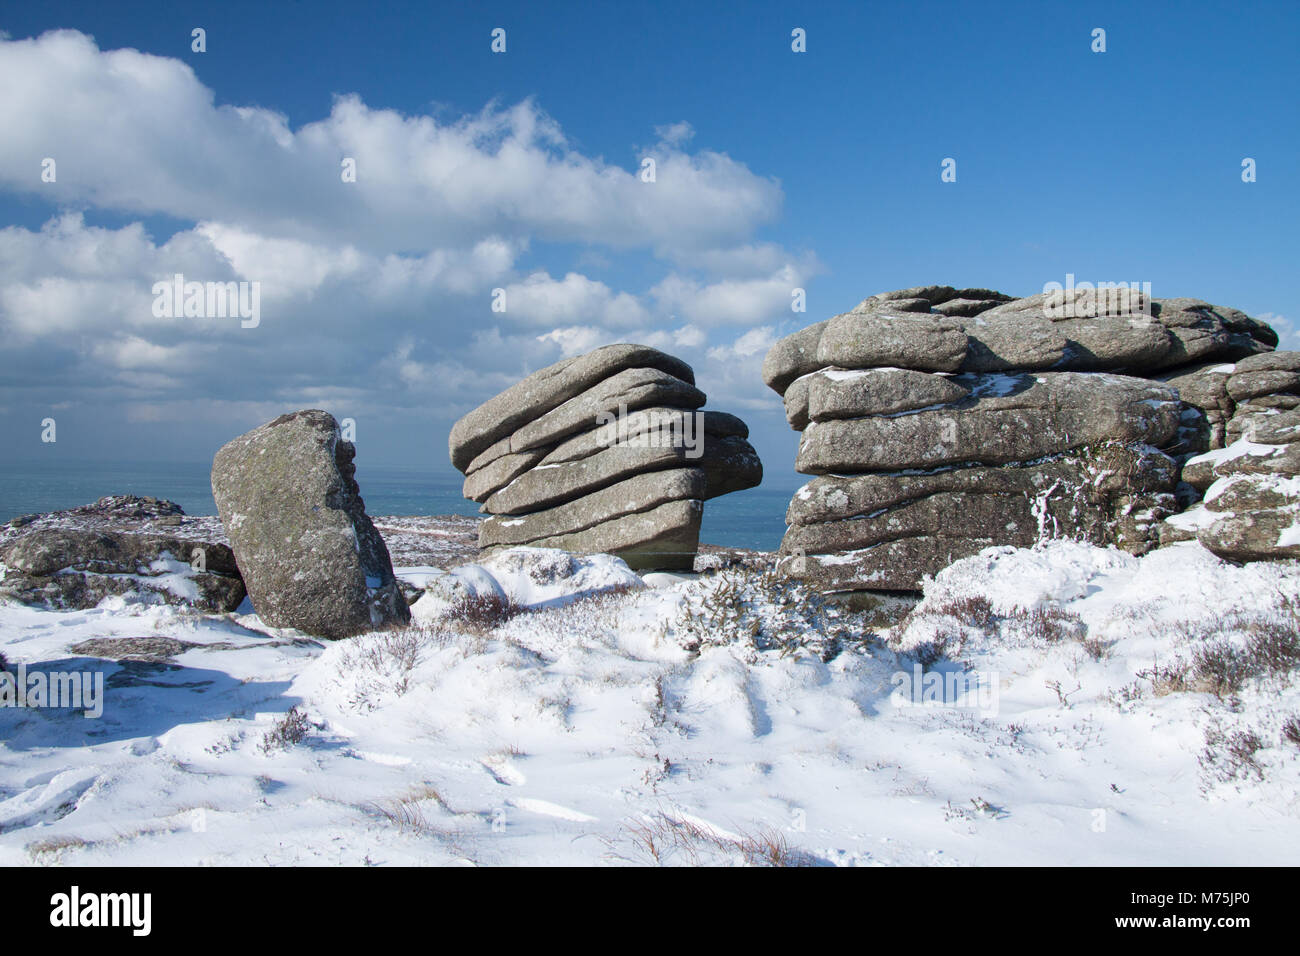 Skulpturale Granitfelsen im Schnee auf Hügel, Cornwall Zennor Stockfoto